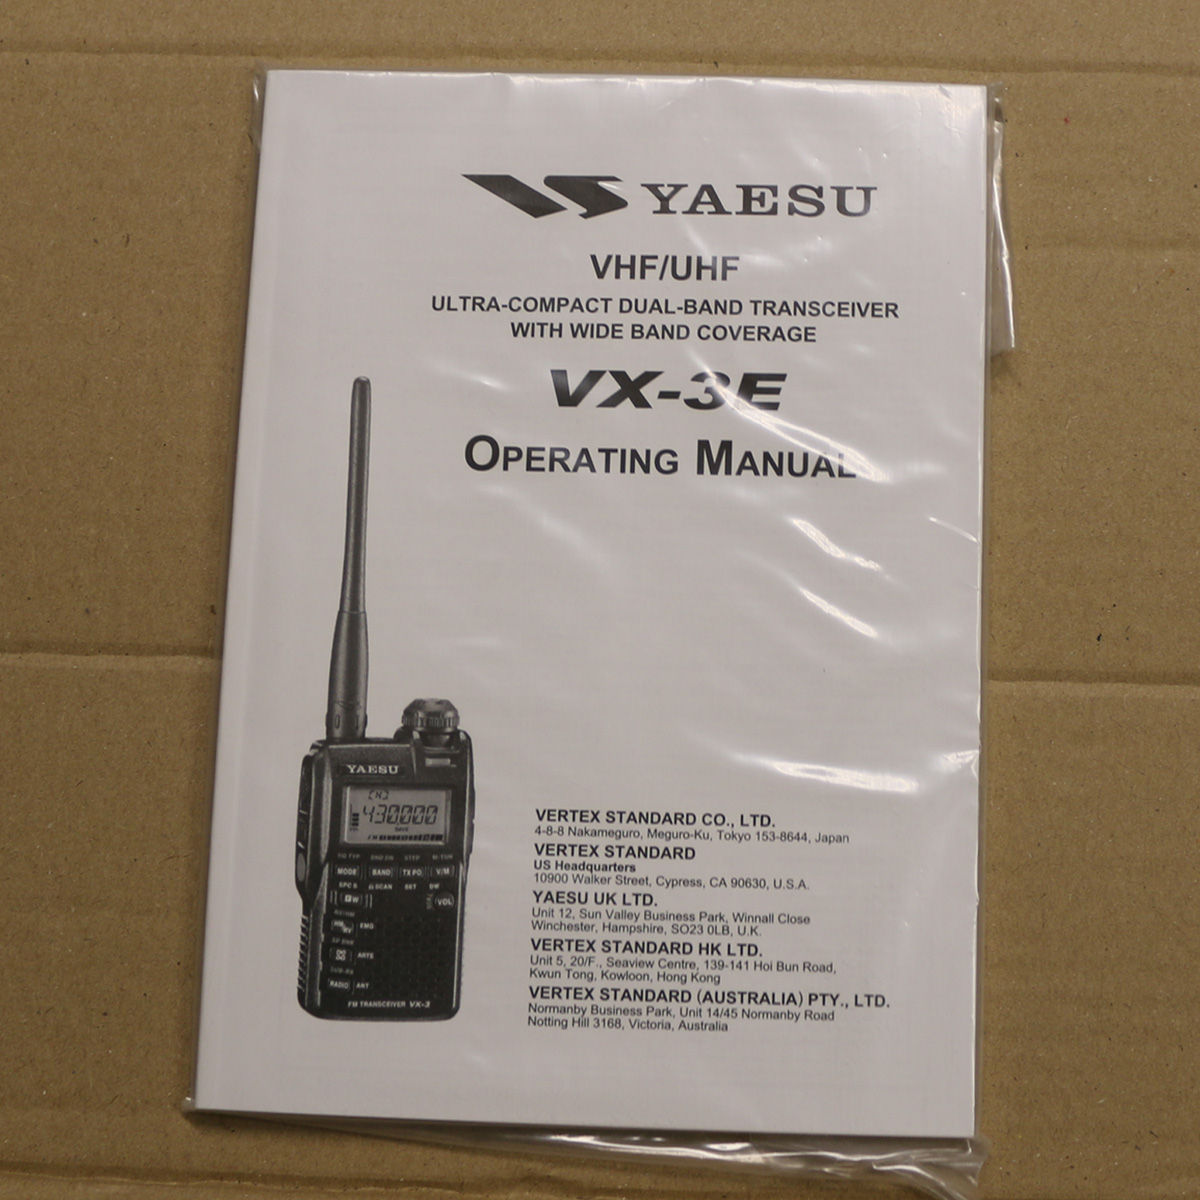 Yaesu VX-3E Operating Manual